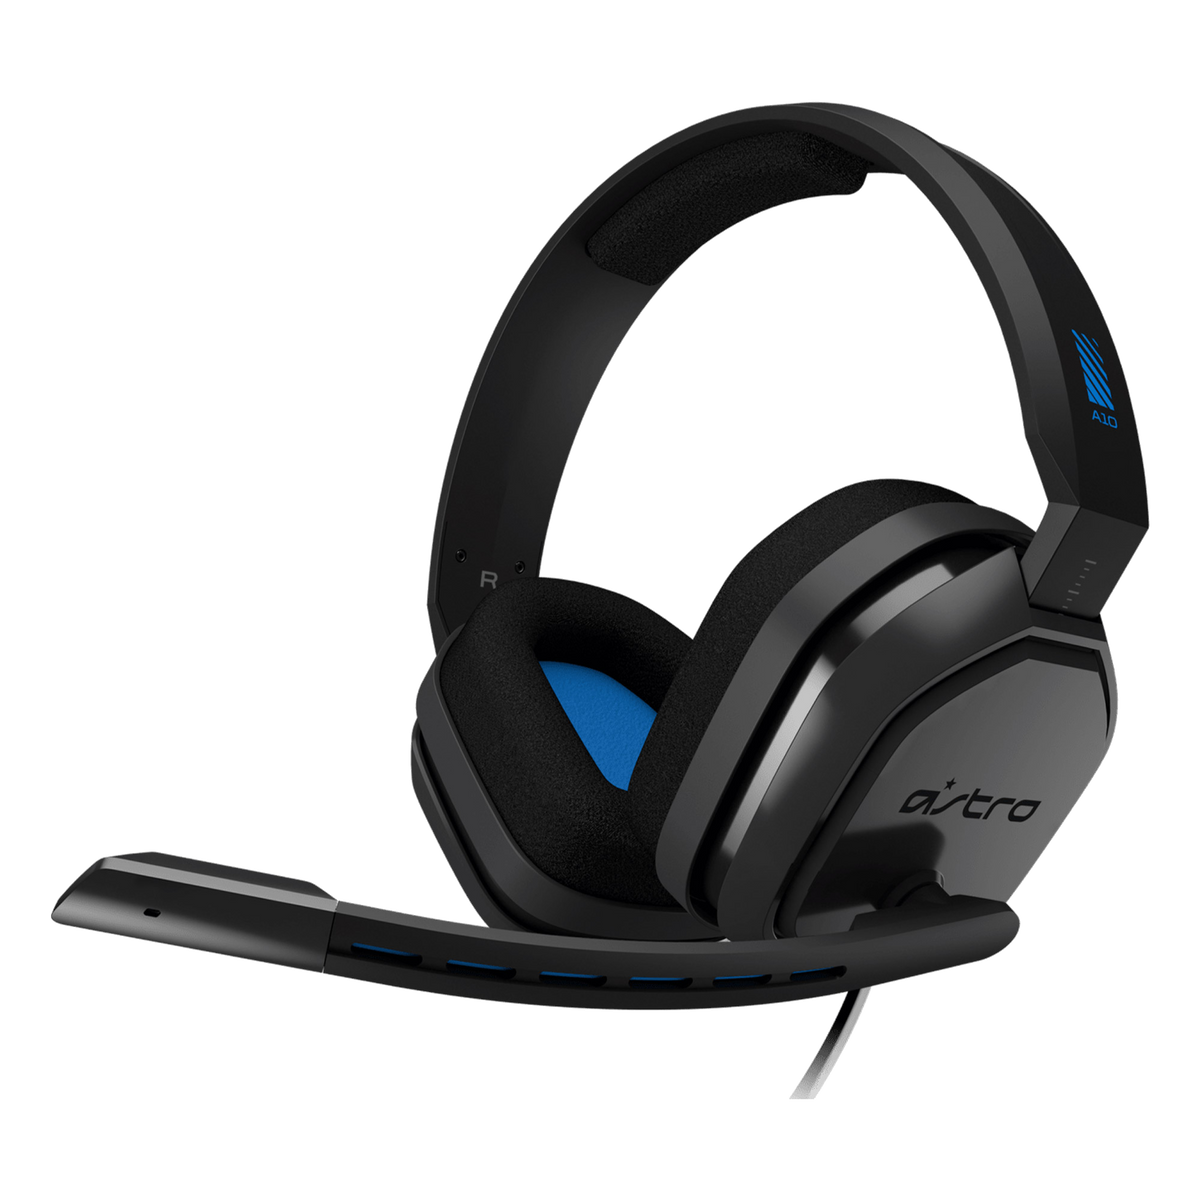 ASTRO GAMING 939-001531 A10 HEADSET PS4 Gaming Headset GREY/BLUE, Grau/Blau Over-ear